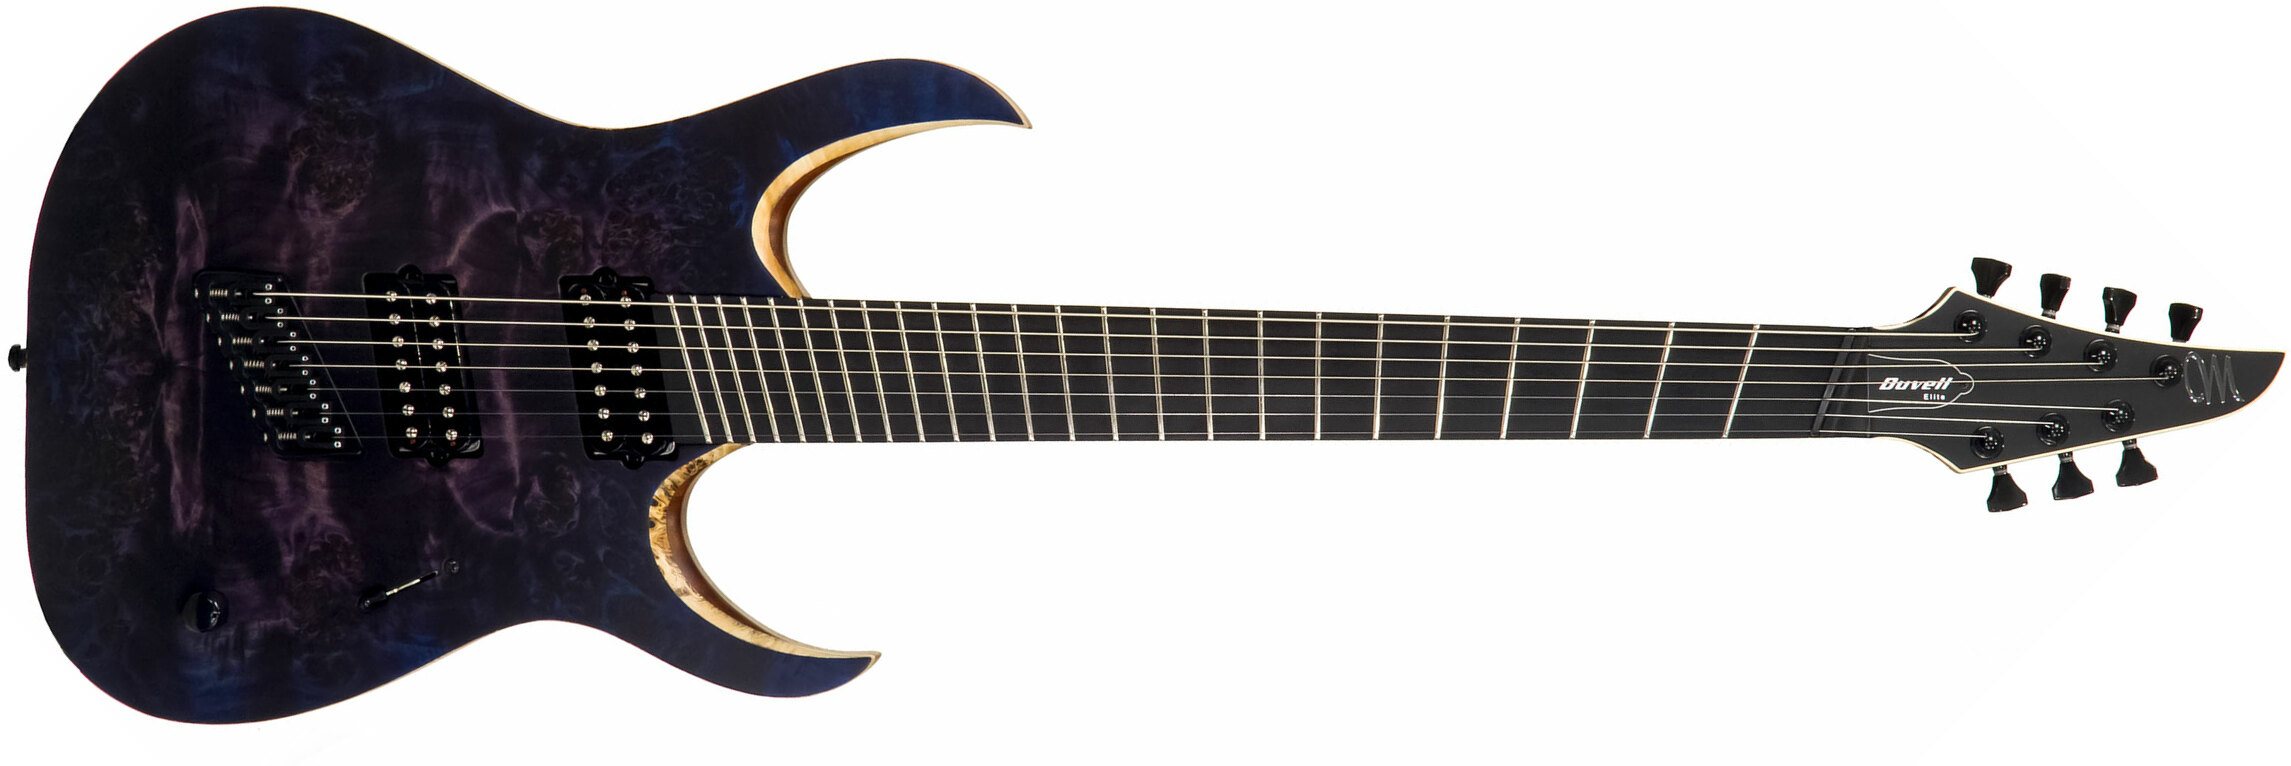 Mayones Guitars Duvell Elite V-frets 7c Multiscale 2h Bare Knuckle Ht Eb - Dirty Purple Blue Burst - Multi-scale gitaar - Main picture